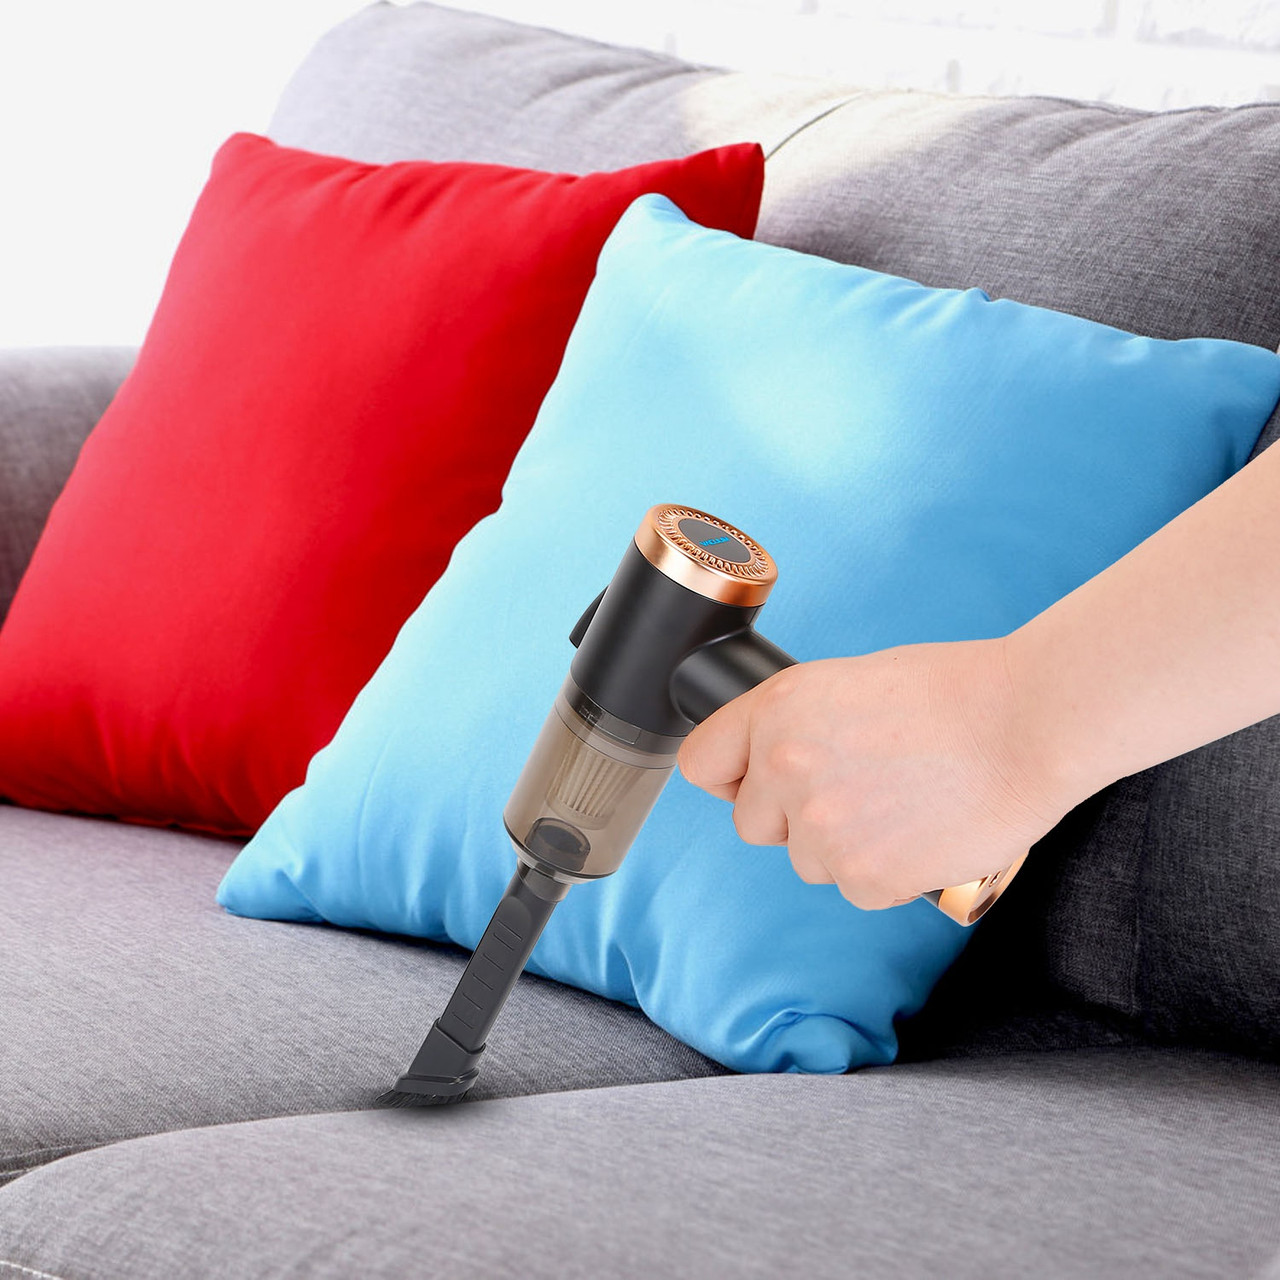 iMounTEK® 120W Handheld Vacuum Cleaner product image